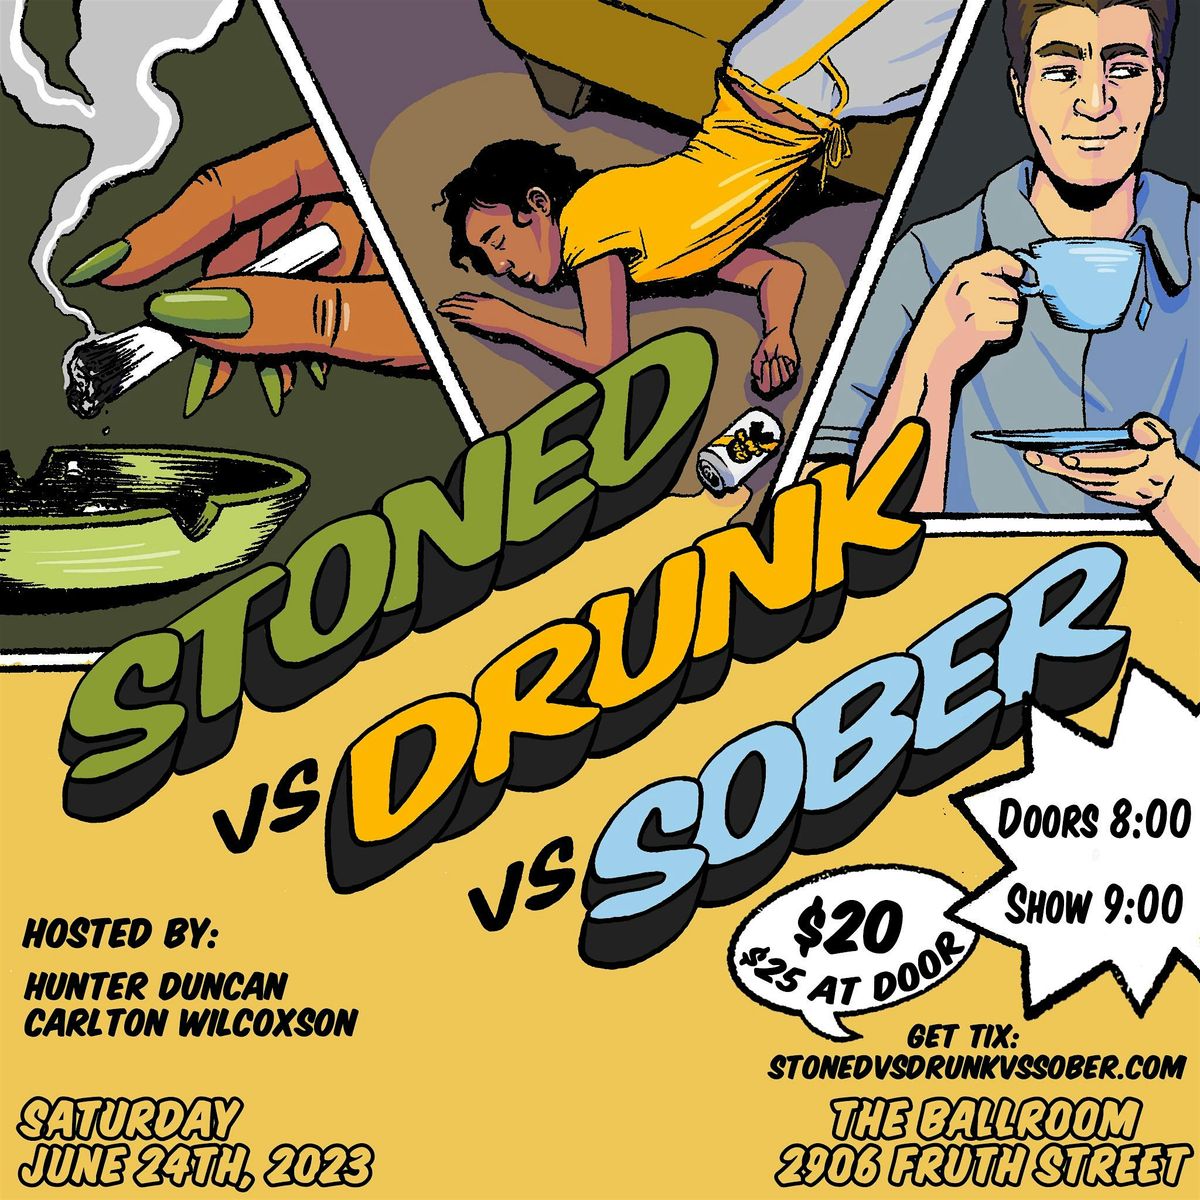 Stoned vs Drunk vs Sober: HILARIOUS HALLOWEEN!